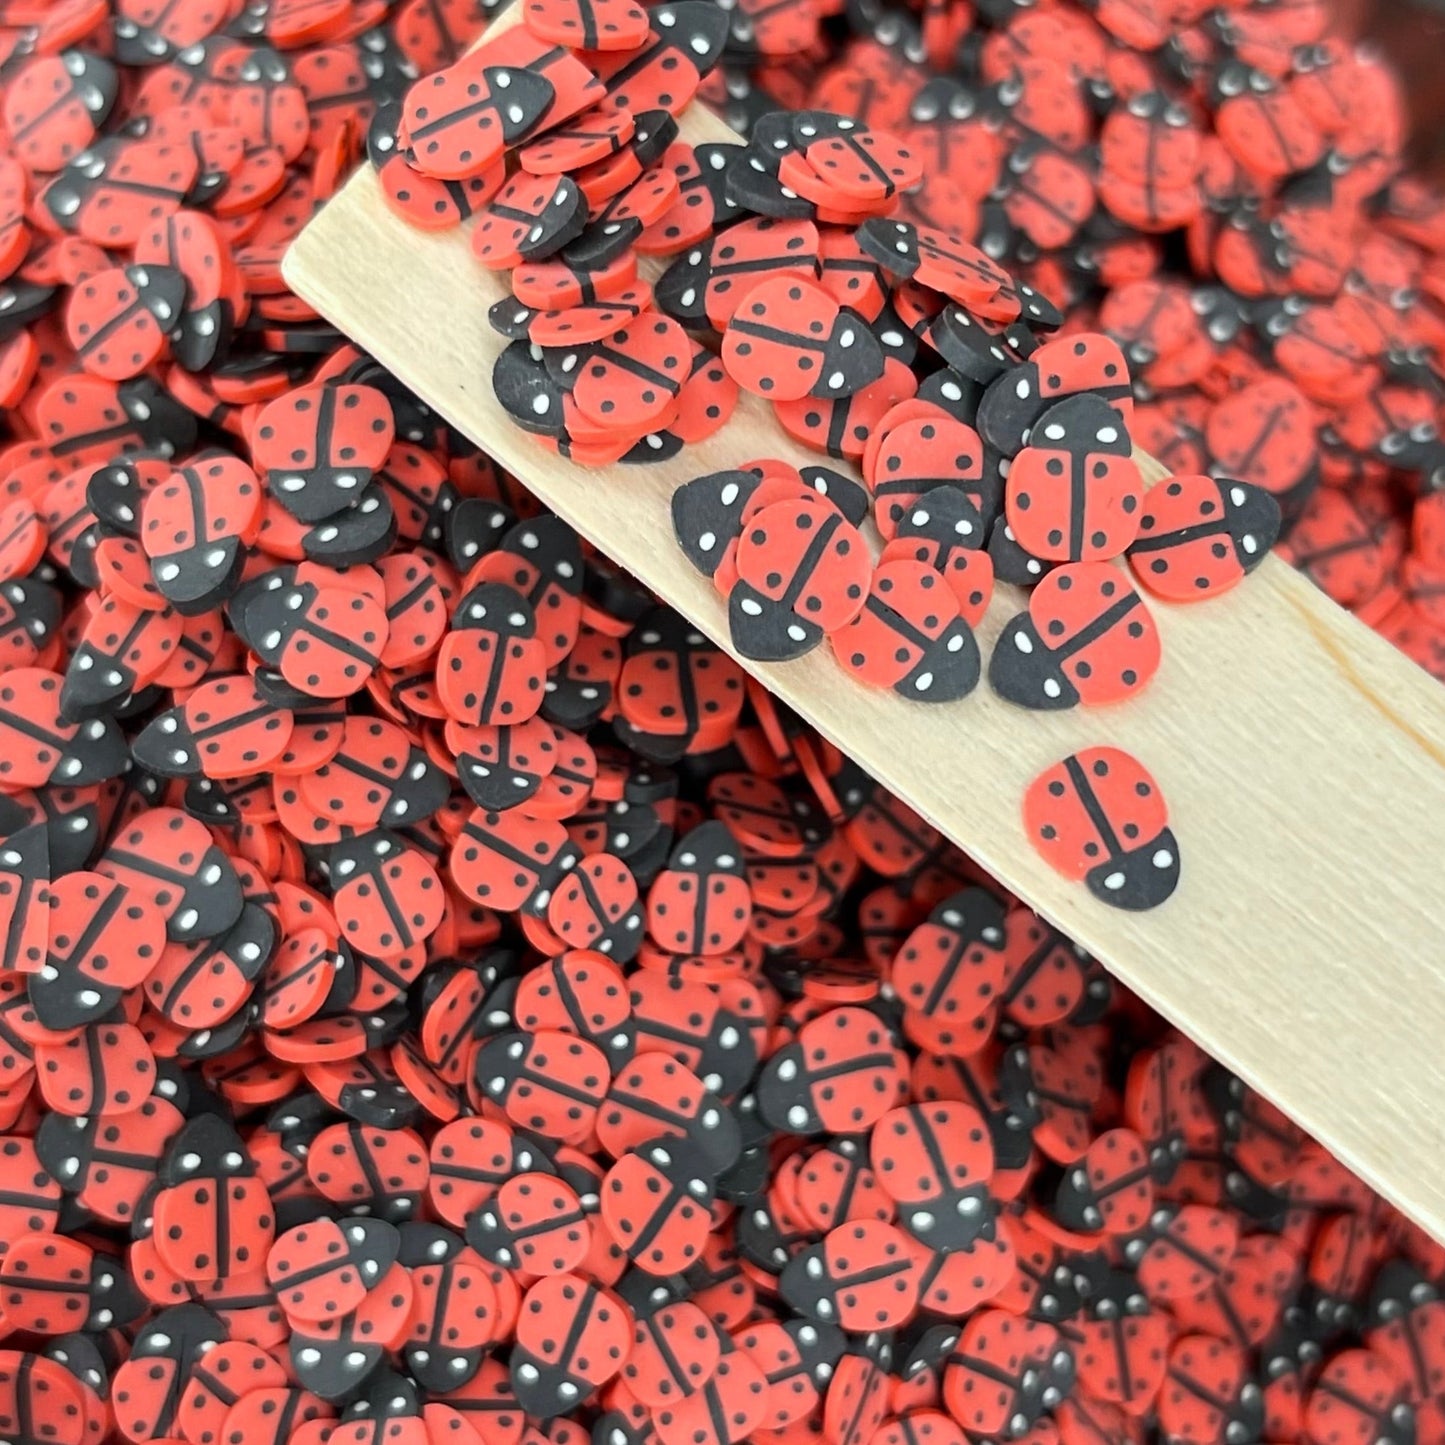 Ladybugs Polymer clay 1 oz - GIDA DESIGN 